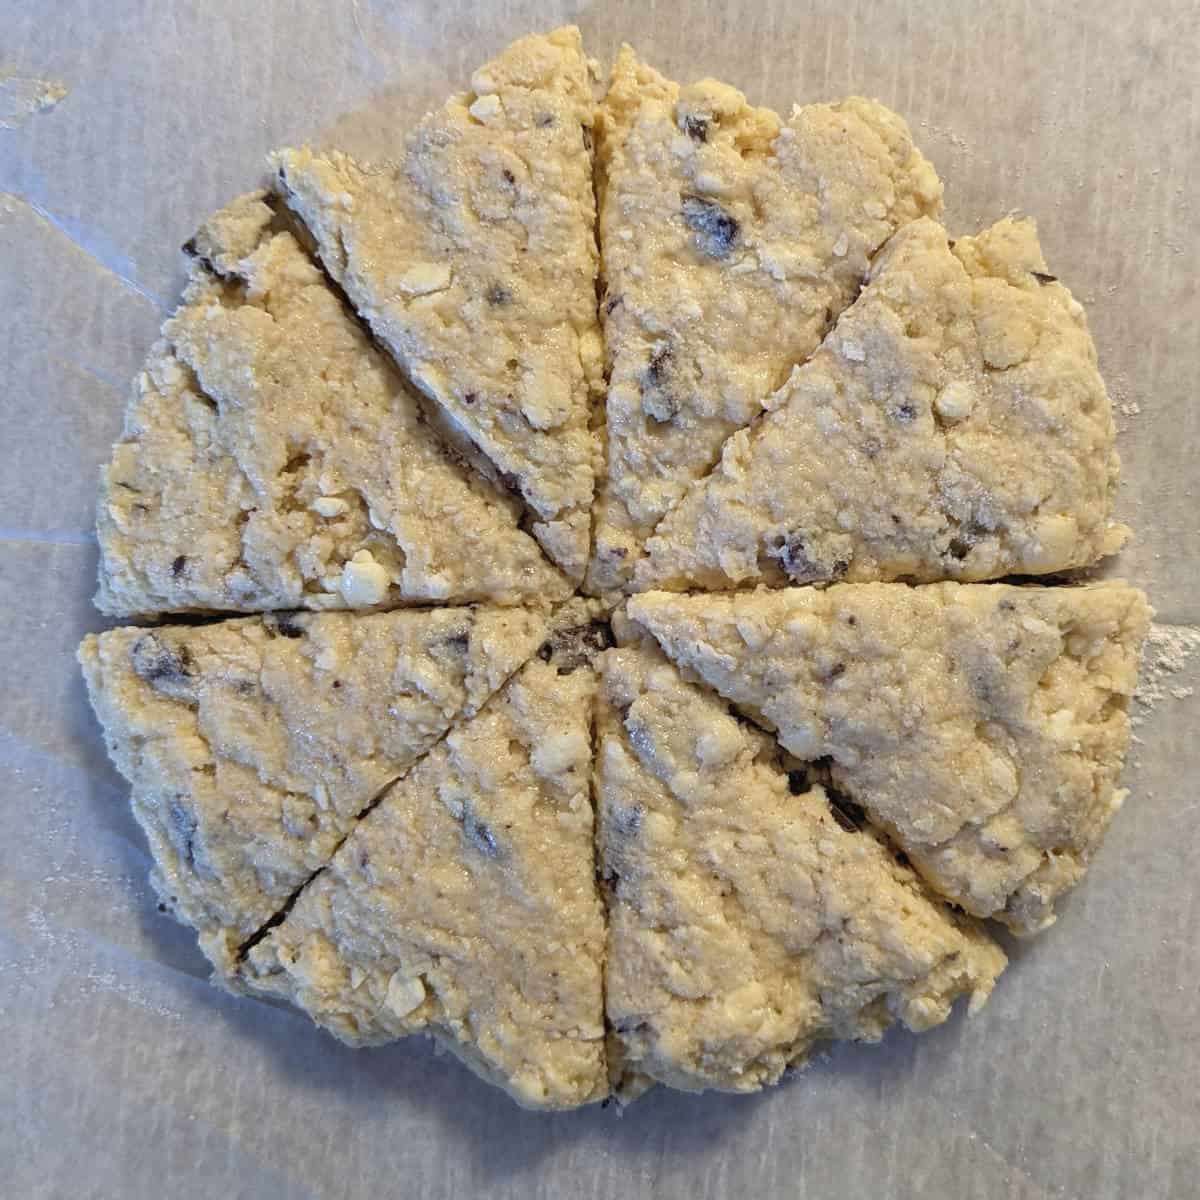 scone dough, cut into 8 wedges